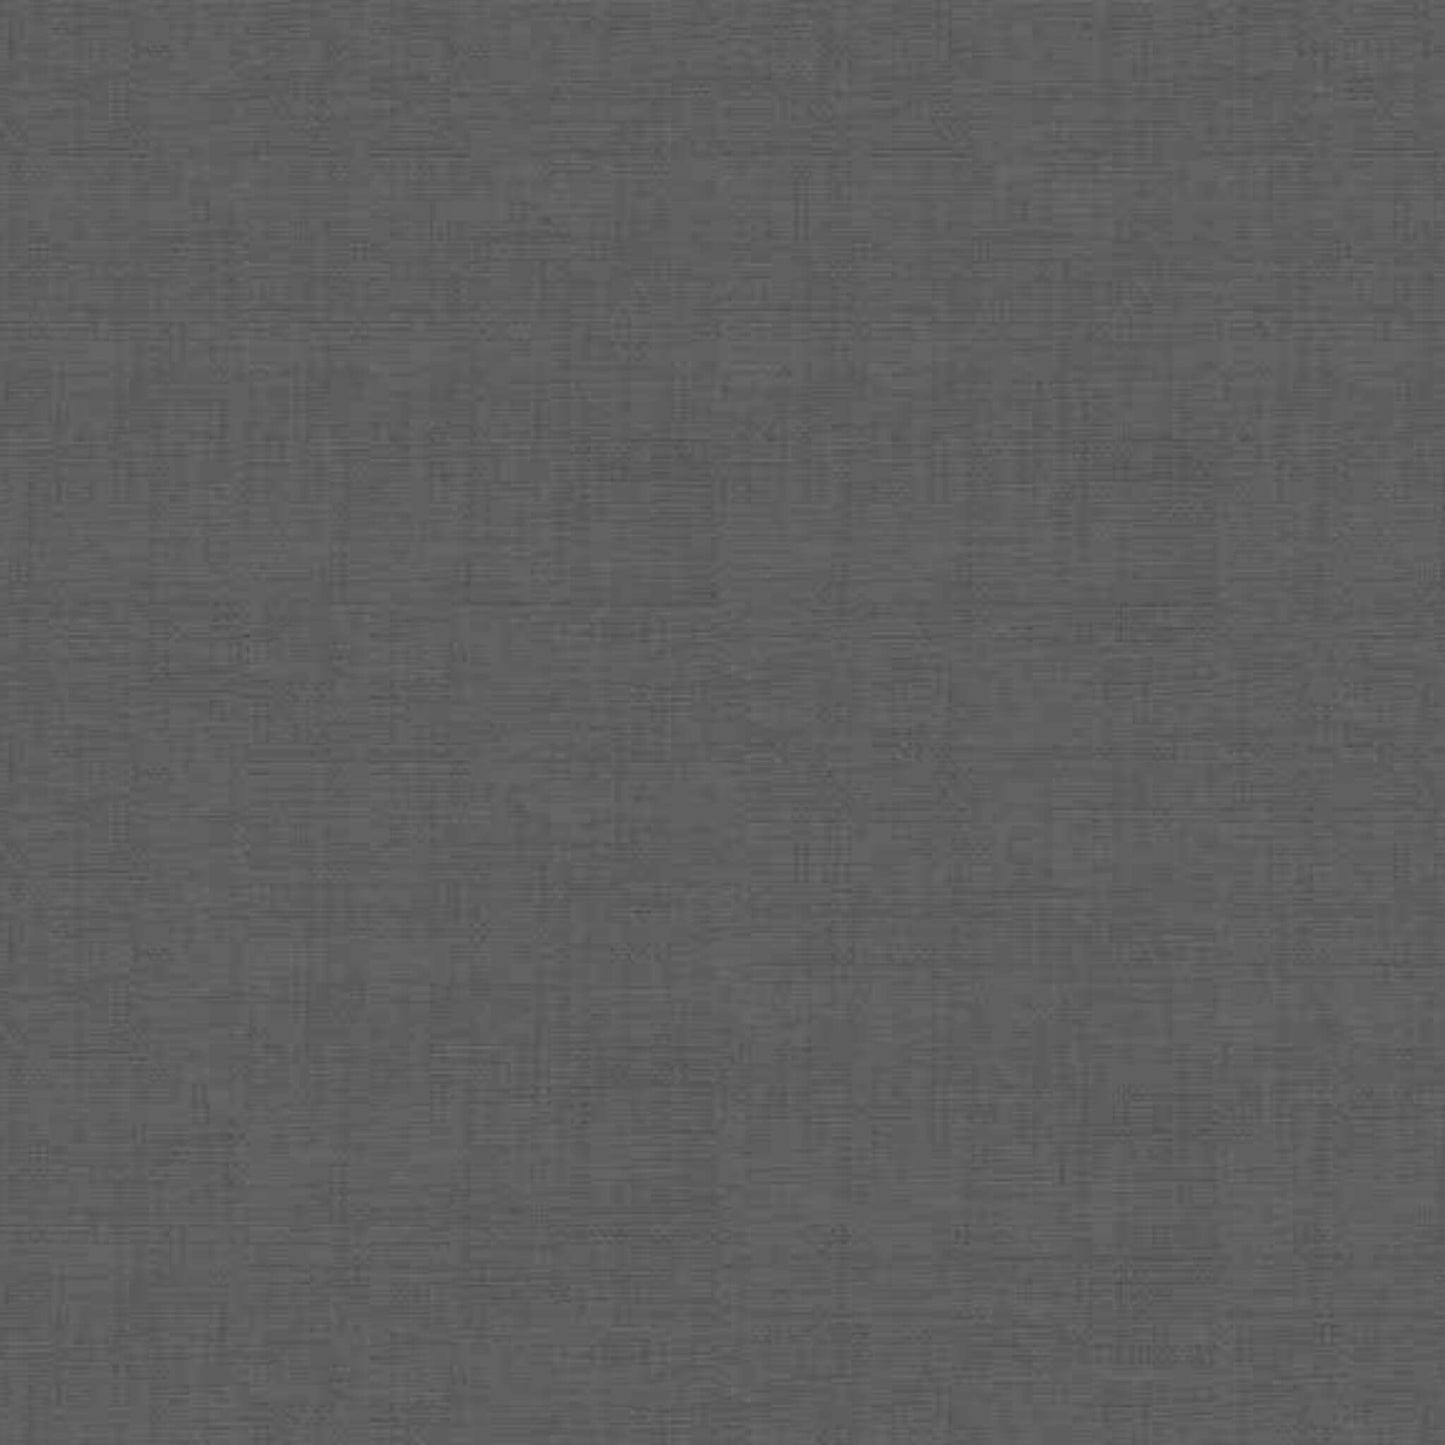 Slate Grey (1473/S8) - Linen Texture range of fabric by Makower